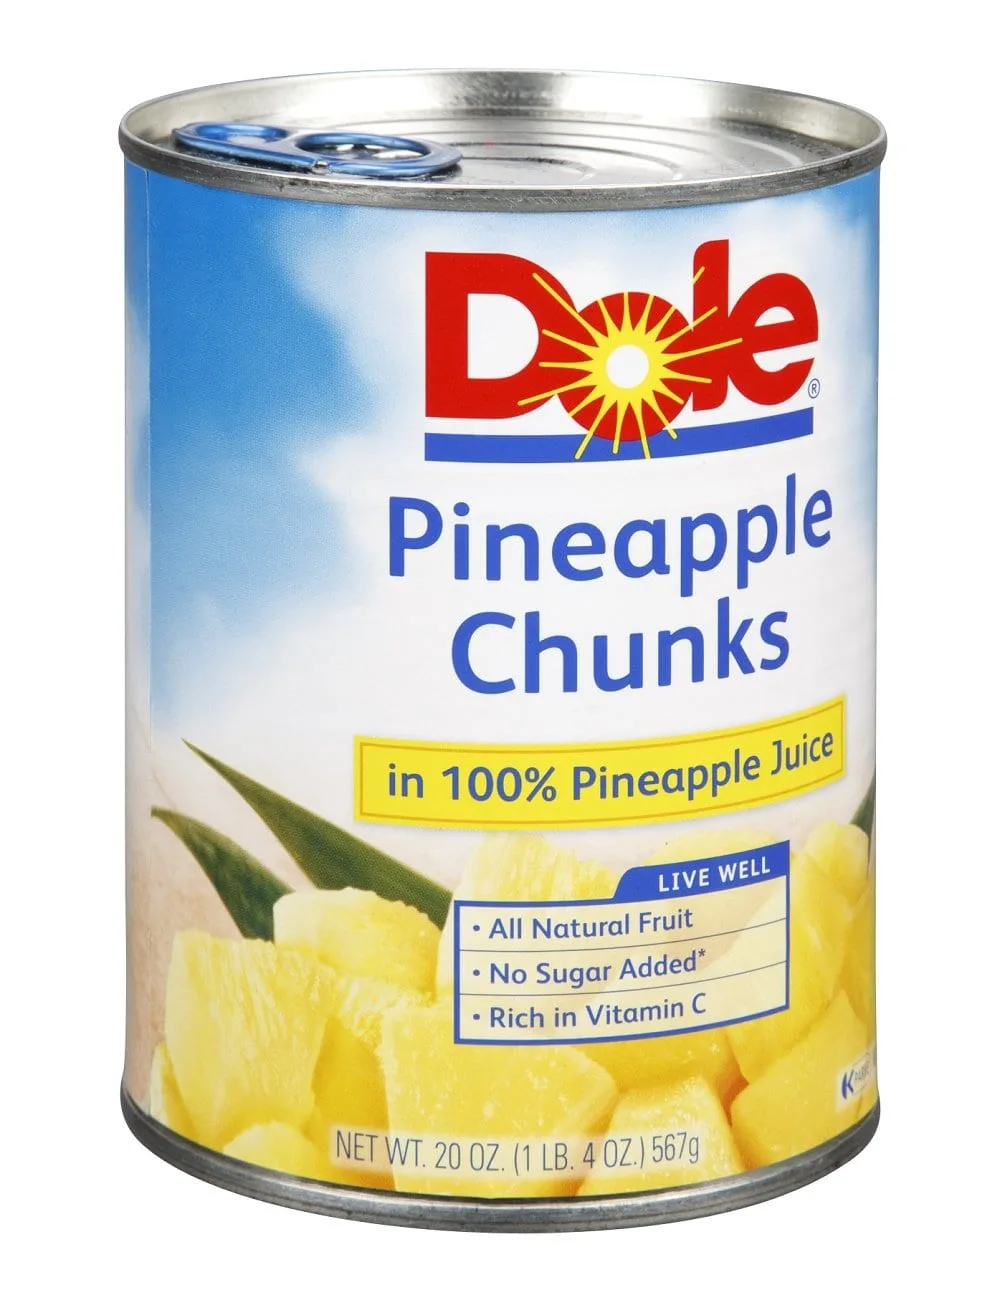 Dole, Pineapple Chunks in 100% Pineapple Juice
